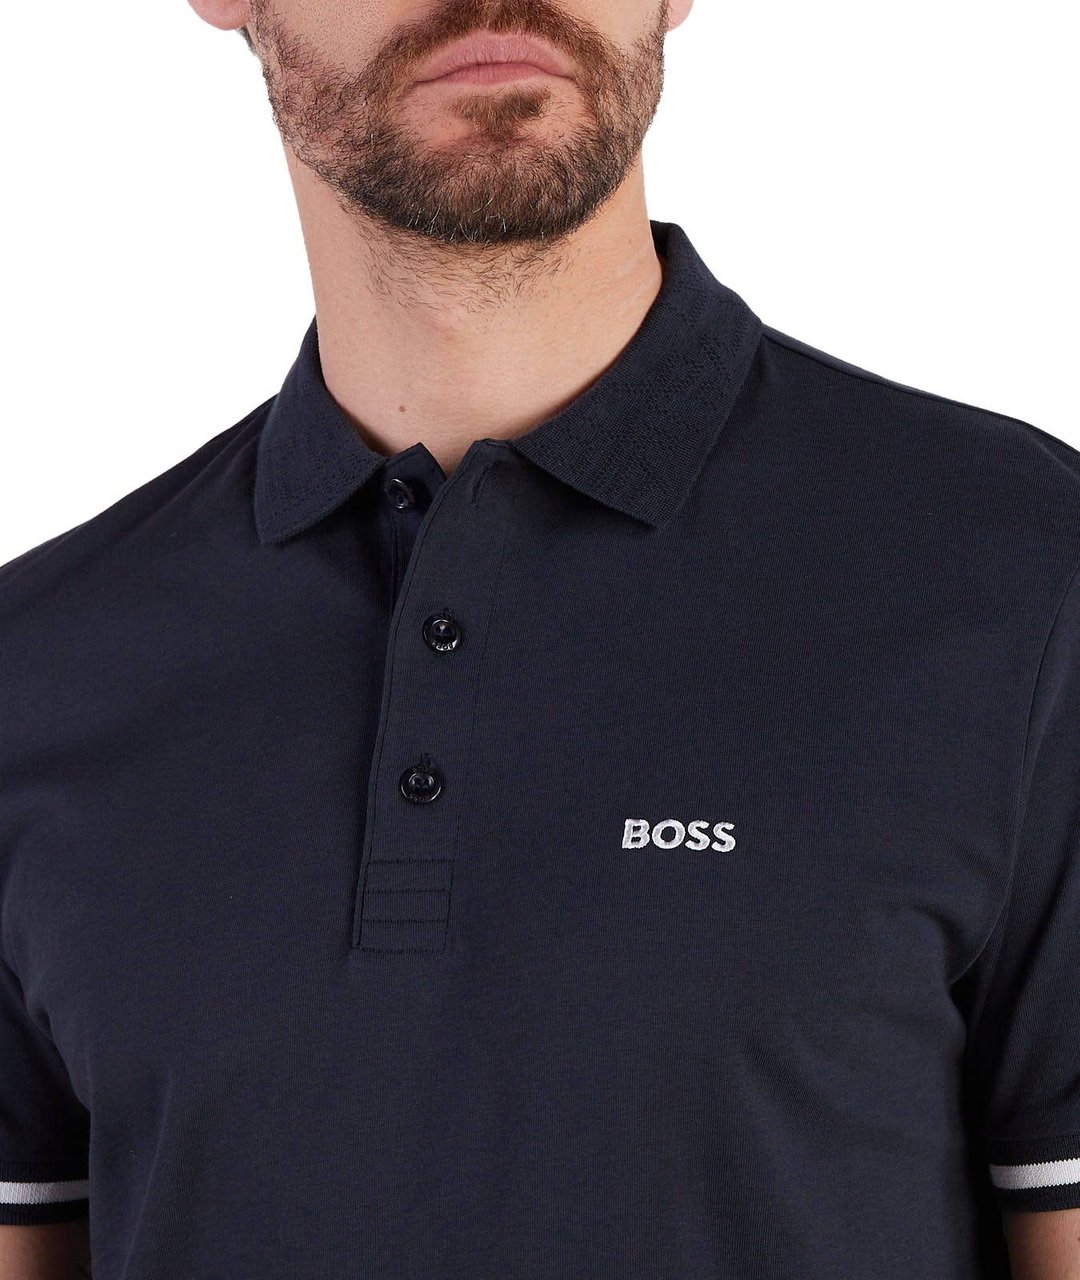 Hugo Boss Boss T-shirts And Polos Blue Blauw